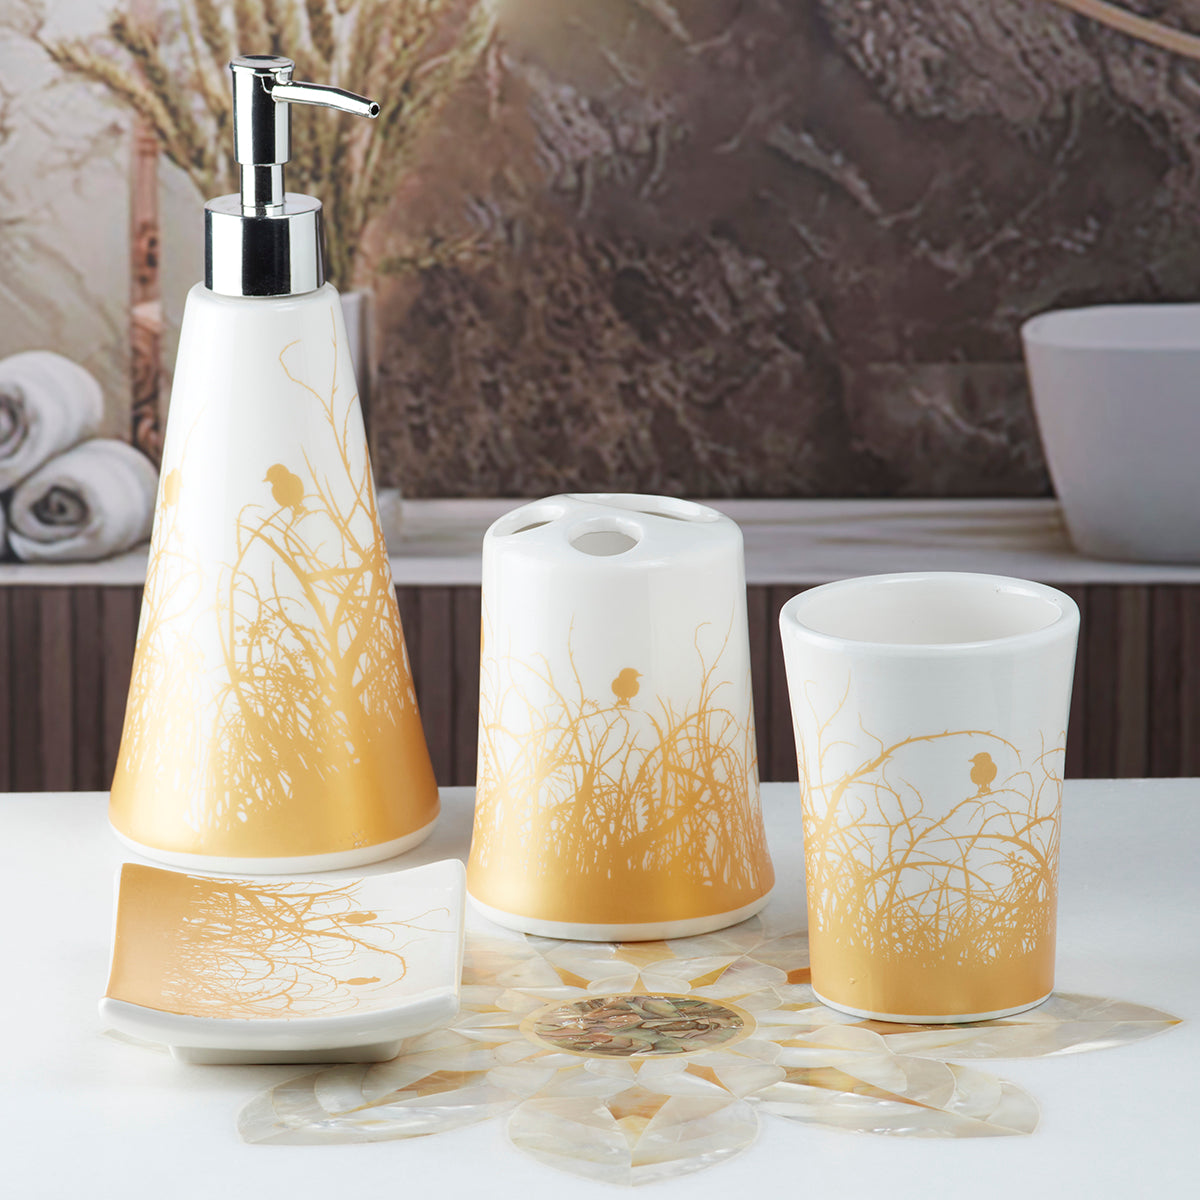 Ceramic Bathroom Accessories Set of 4 Bath Set with Soap Dispenser (8172)